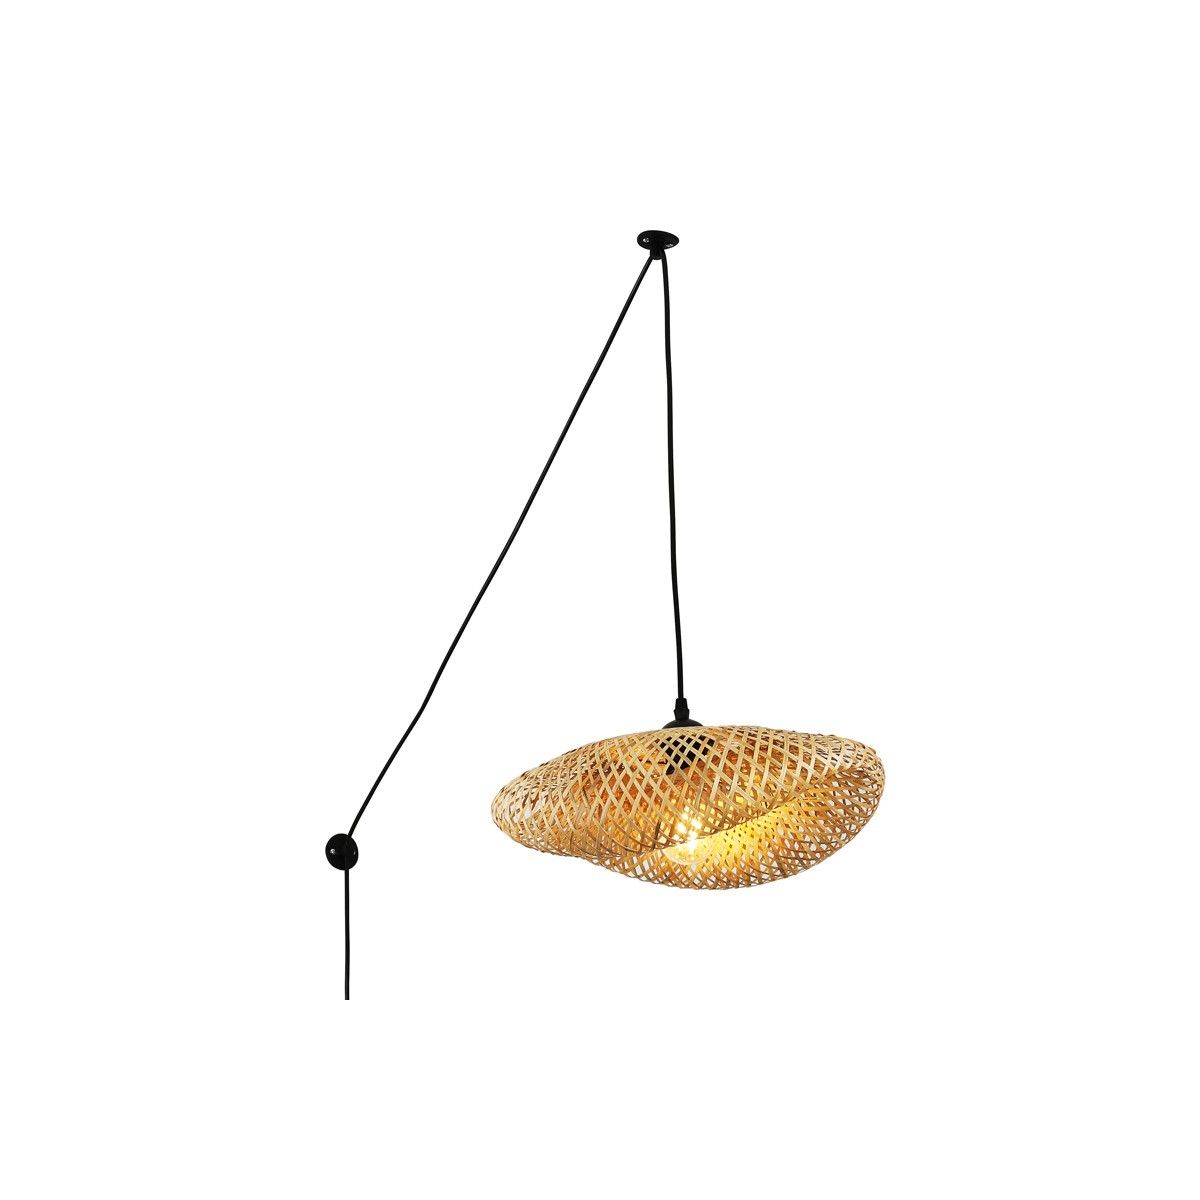 Wicker pendant lamp with plug "Vimet".